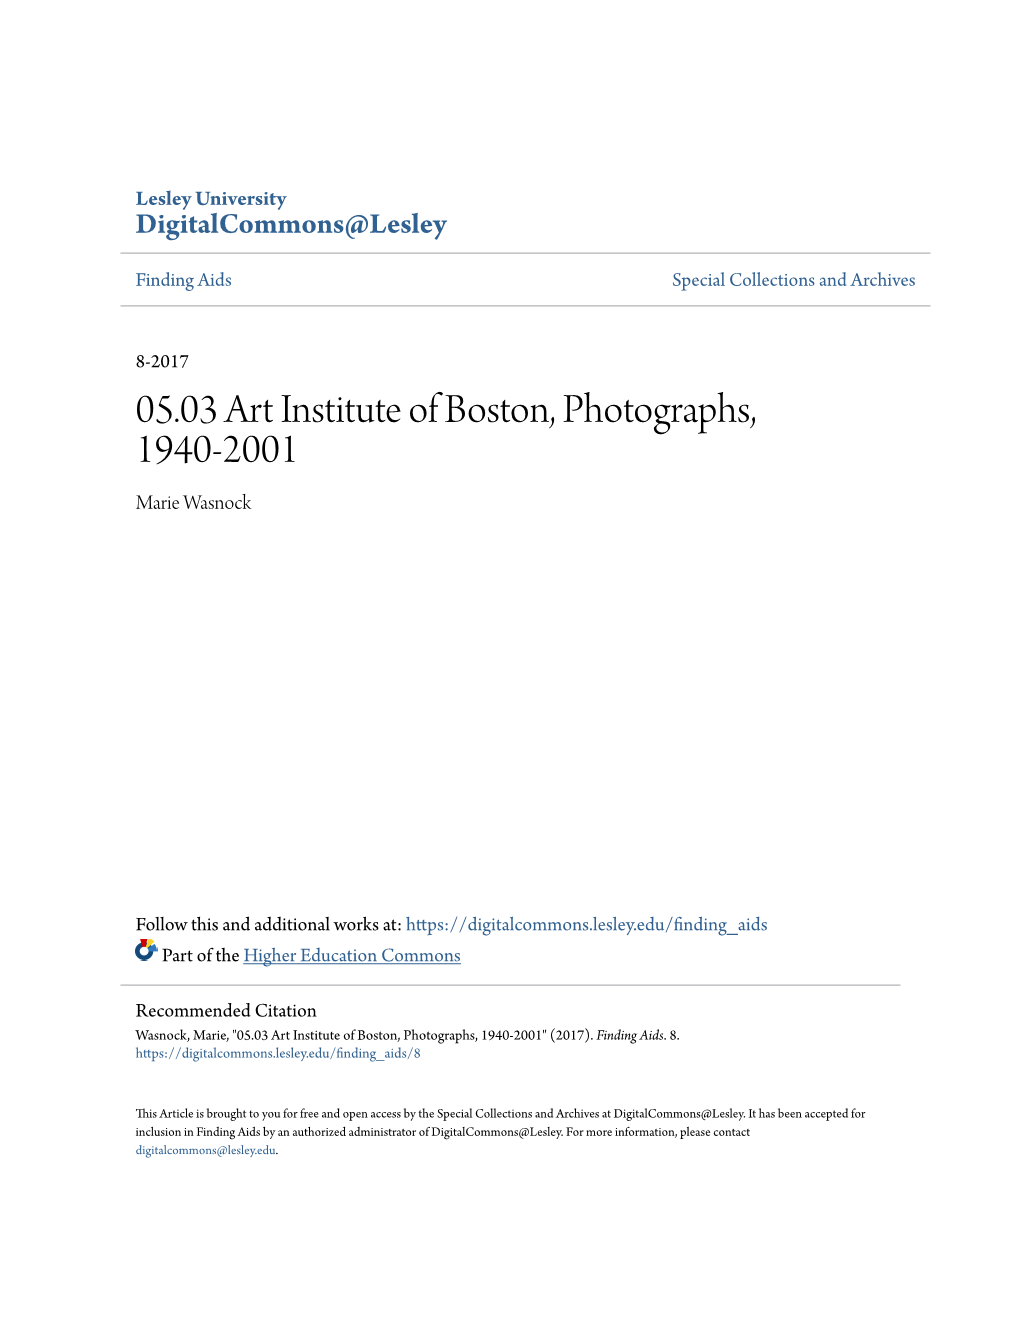 05.03 Art Institute of Boston, Photographs, 1940-2001 Marie Wasnock